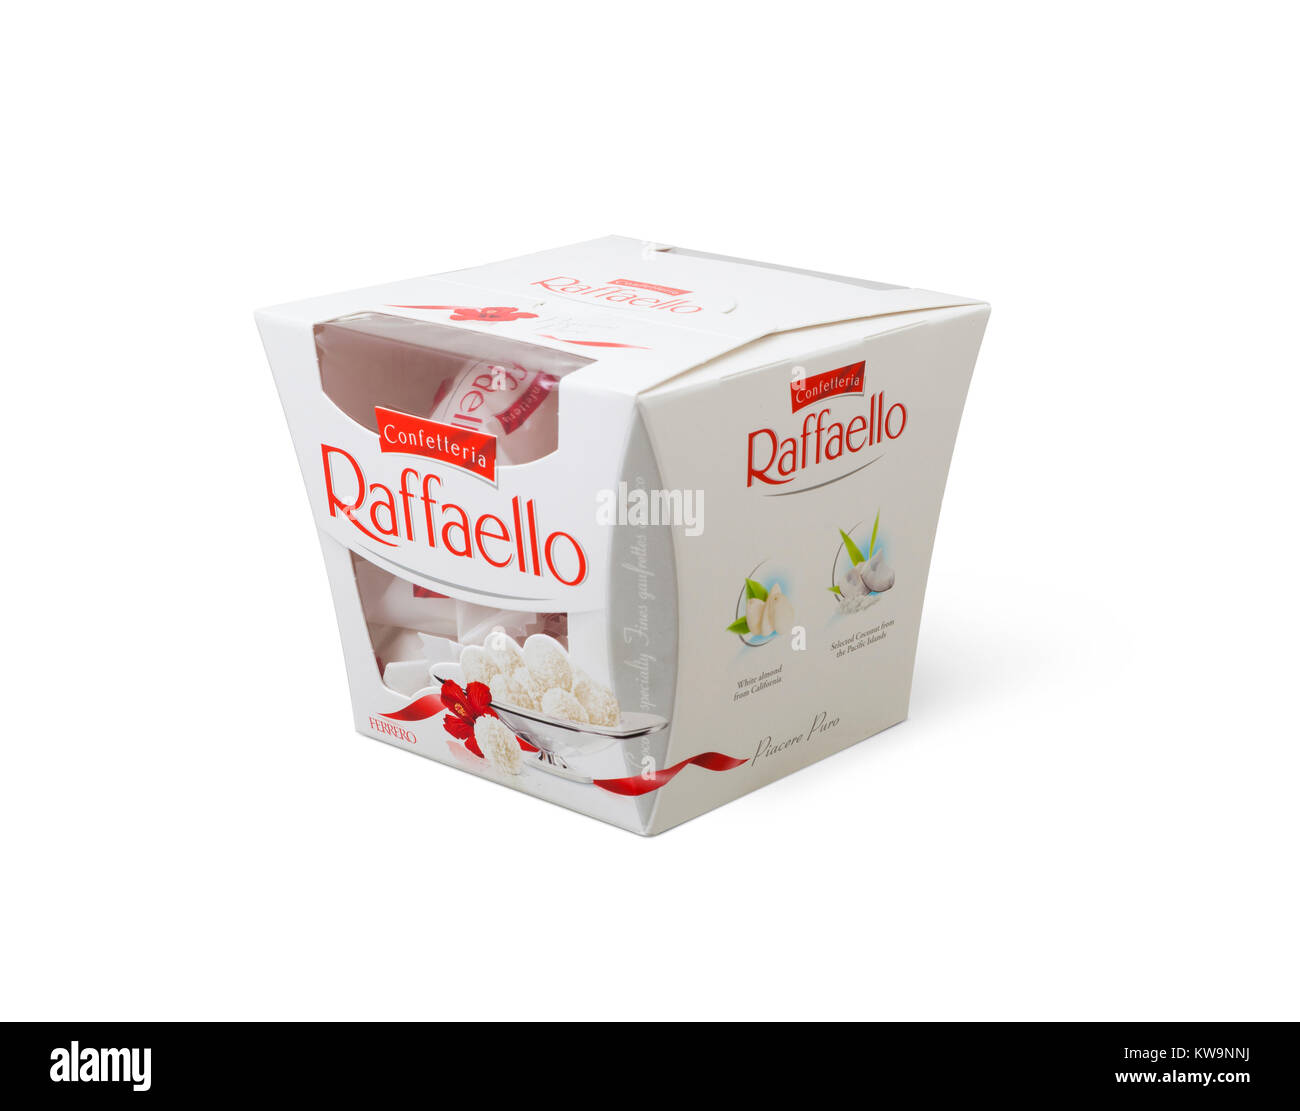 Ferrero Raffaello Stock Photos - 742 Images